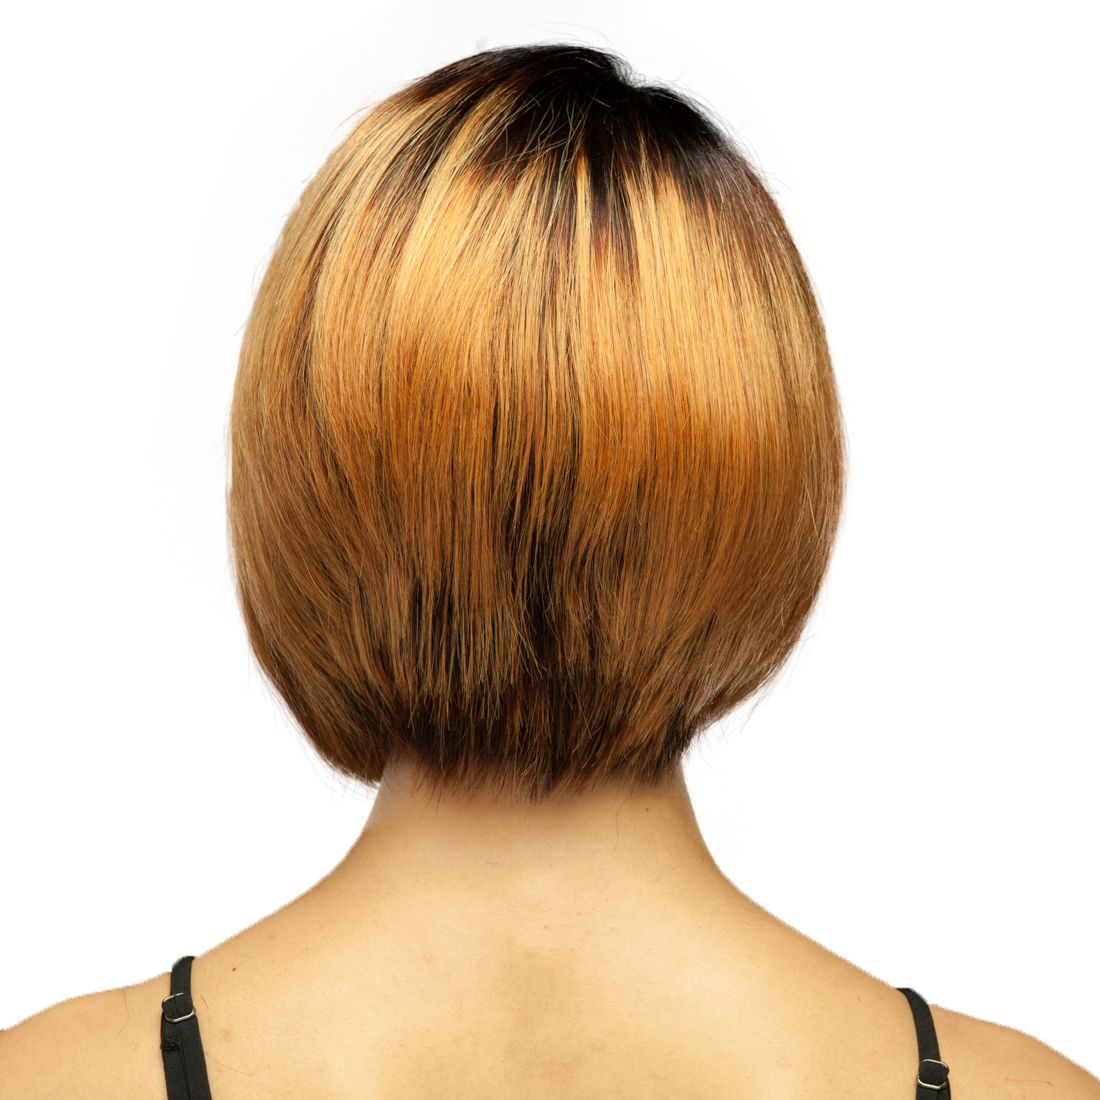 Professional Salon Cut Mix Colour Brown Lace Front Wig Human Hair Ombre Color 8 Inch Wigs, Short Virgin Hair Lace CLosure Wig